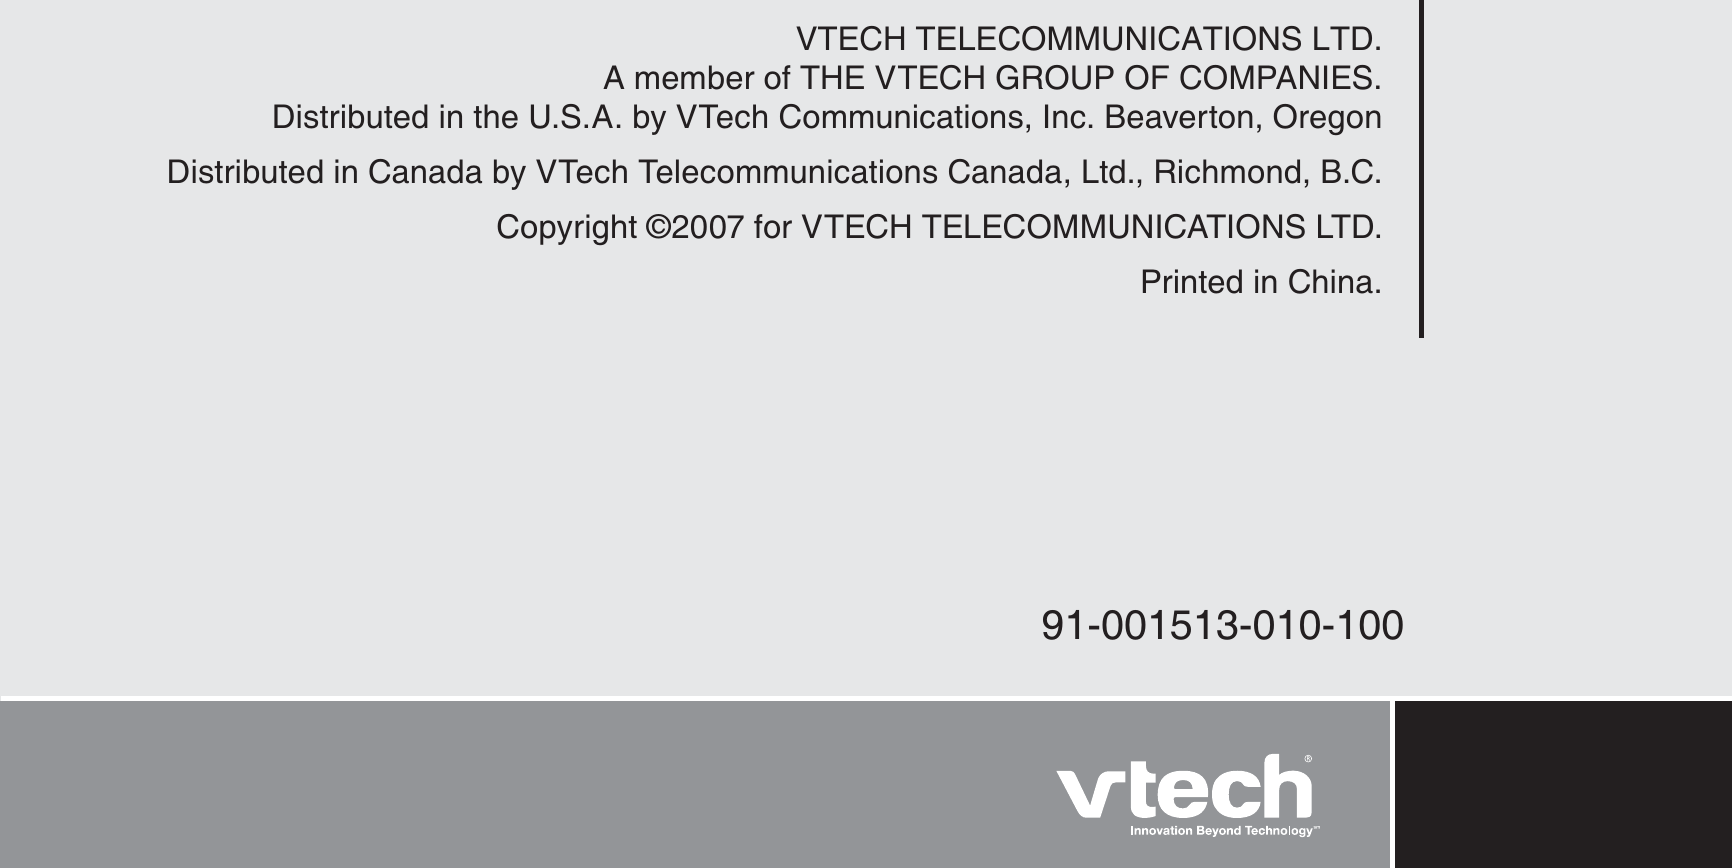 VTECH TELECOMMUNICATIONS LTD.A member of THE VTECH GROUP OF COMPANIES.Distributed in the U.S.A. by VTech Communications, Inc. Beaverton, OregonDistributed in Canada by VTech Telecommunications Canada, Ltd., Richmond, B.C.Copyright ©2007 for VTECH TELECOMMUNICATIONS LTD.Printed in China.91-001513-010-100